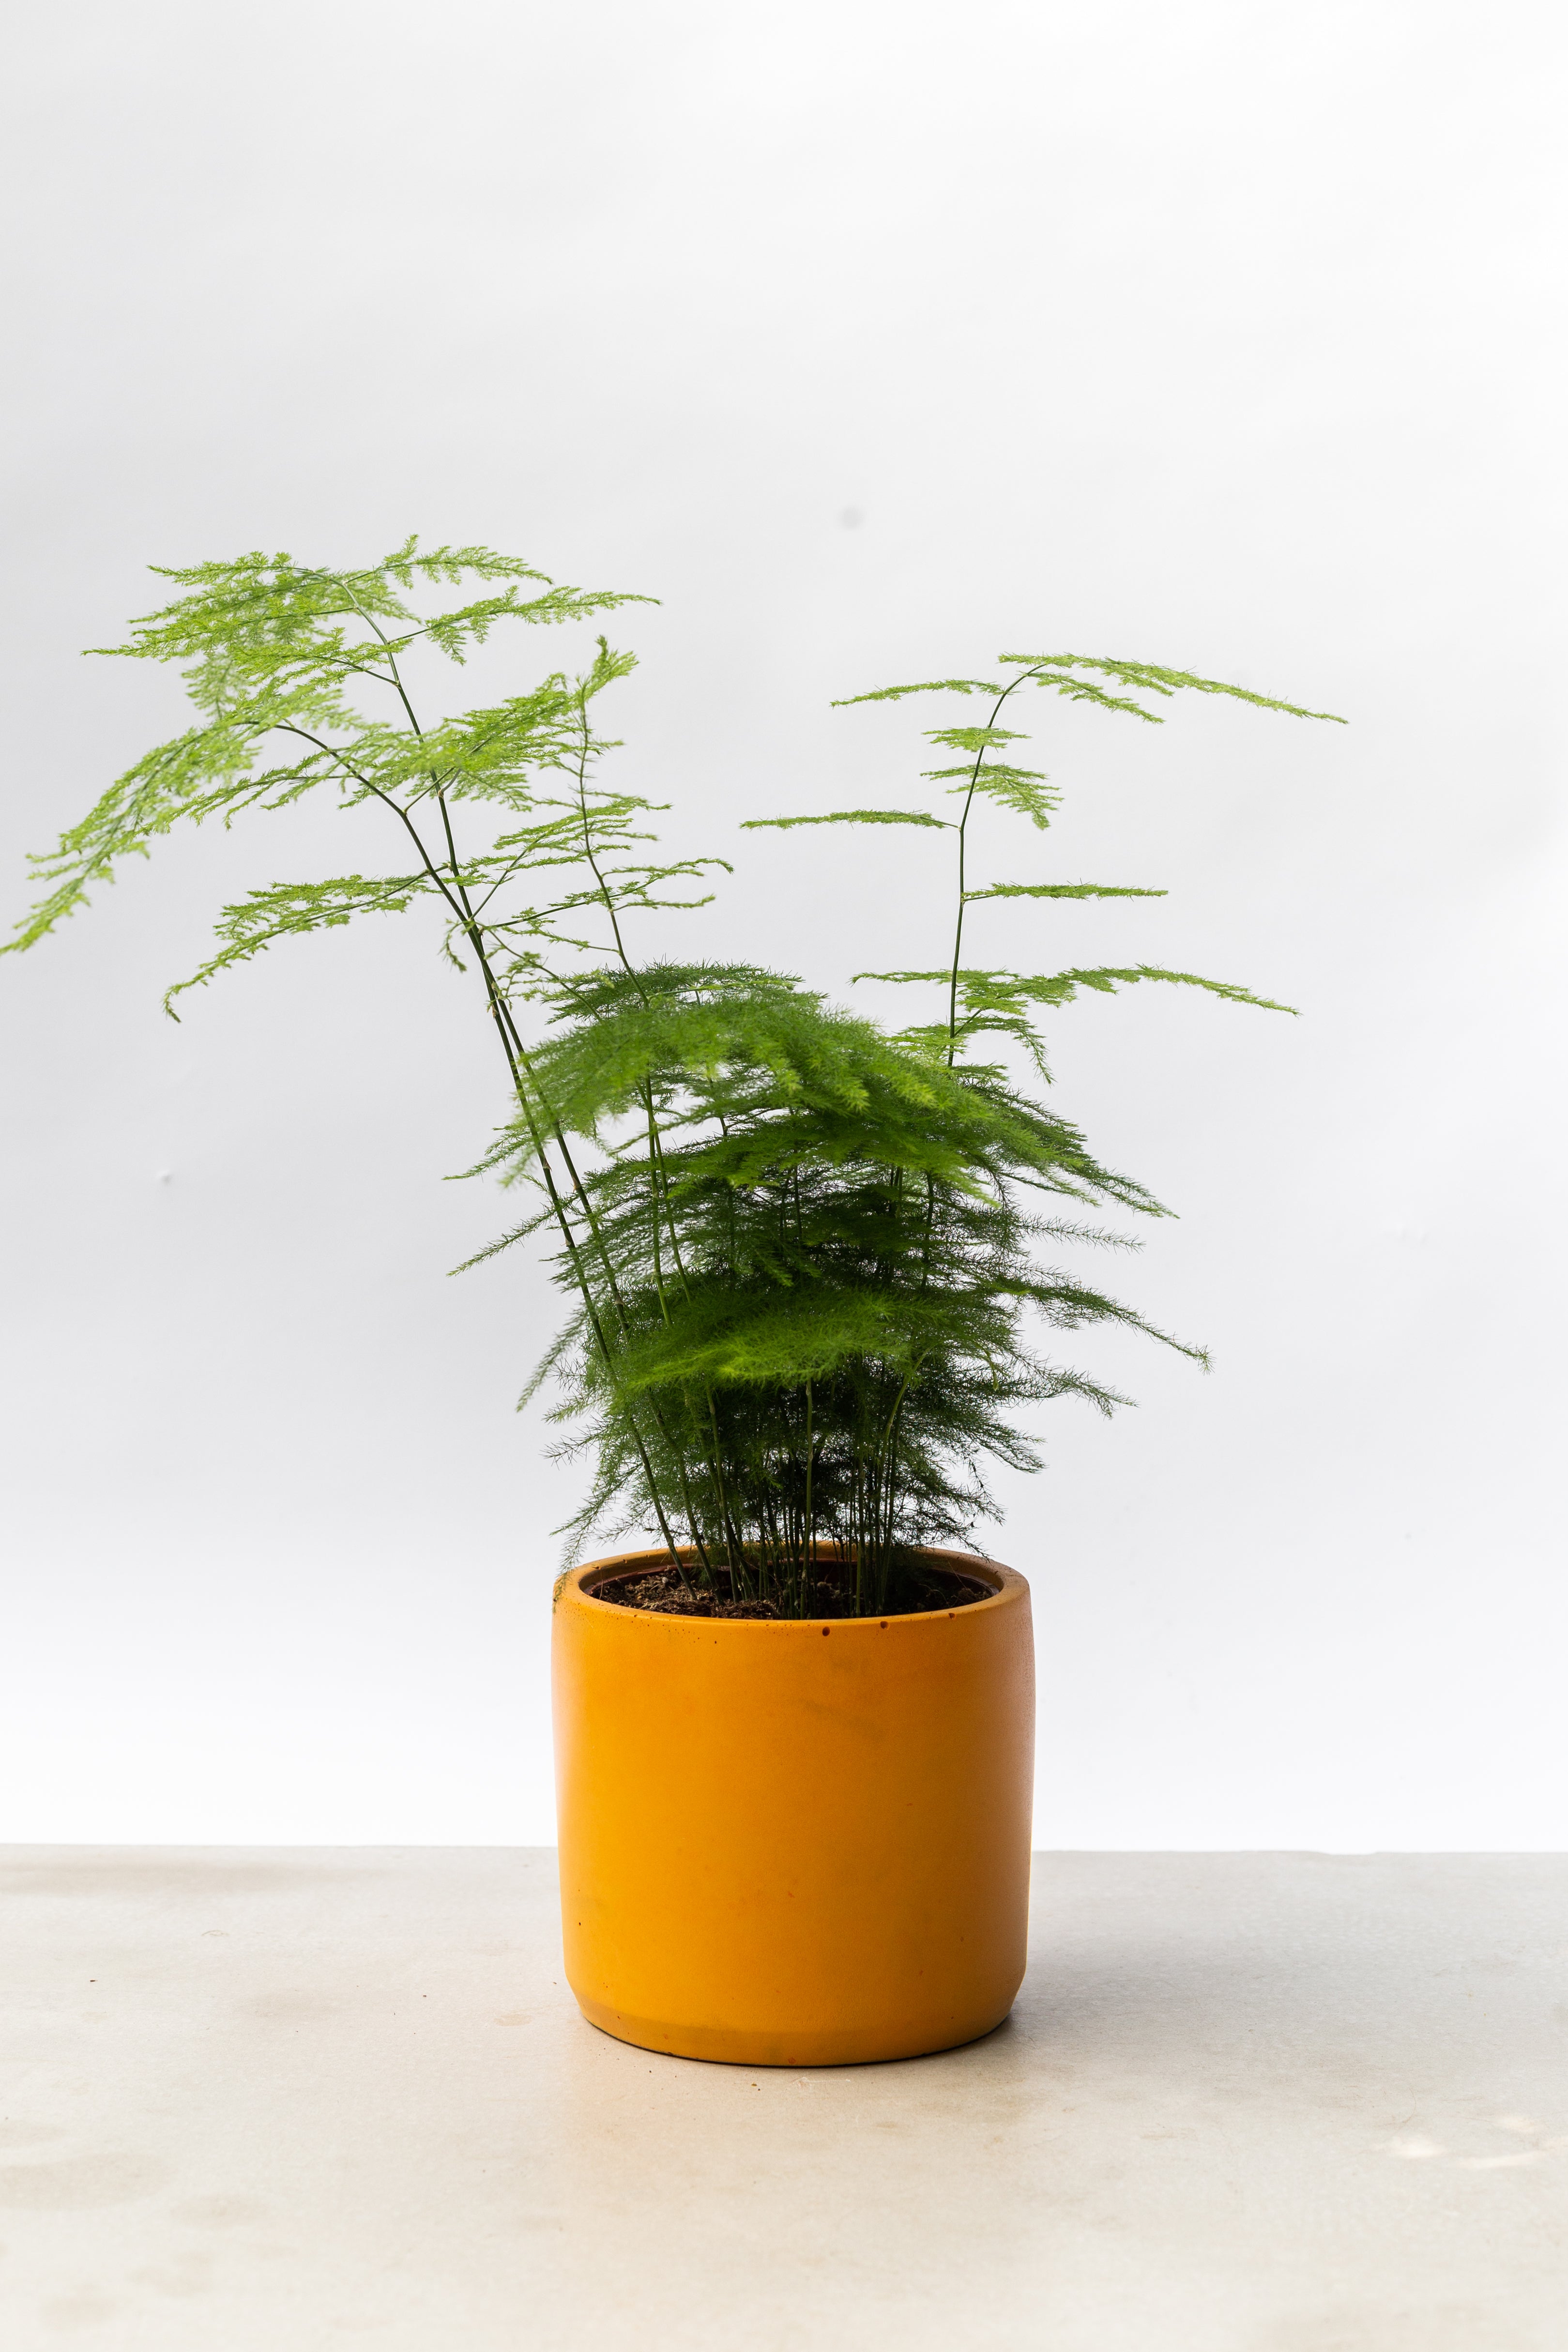 Asparagus Fern in an orange hand-cast pot by Concrete Jungle London